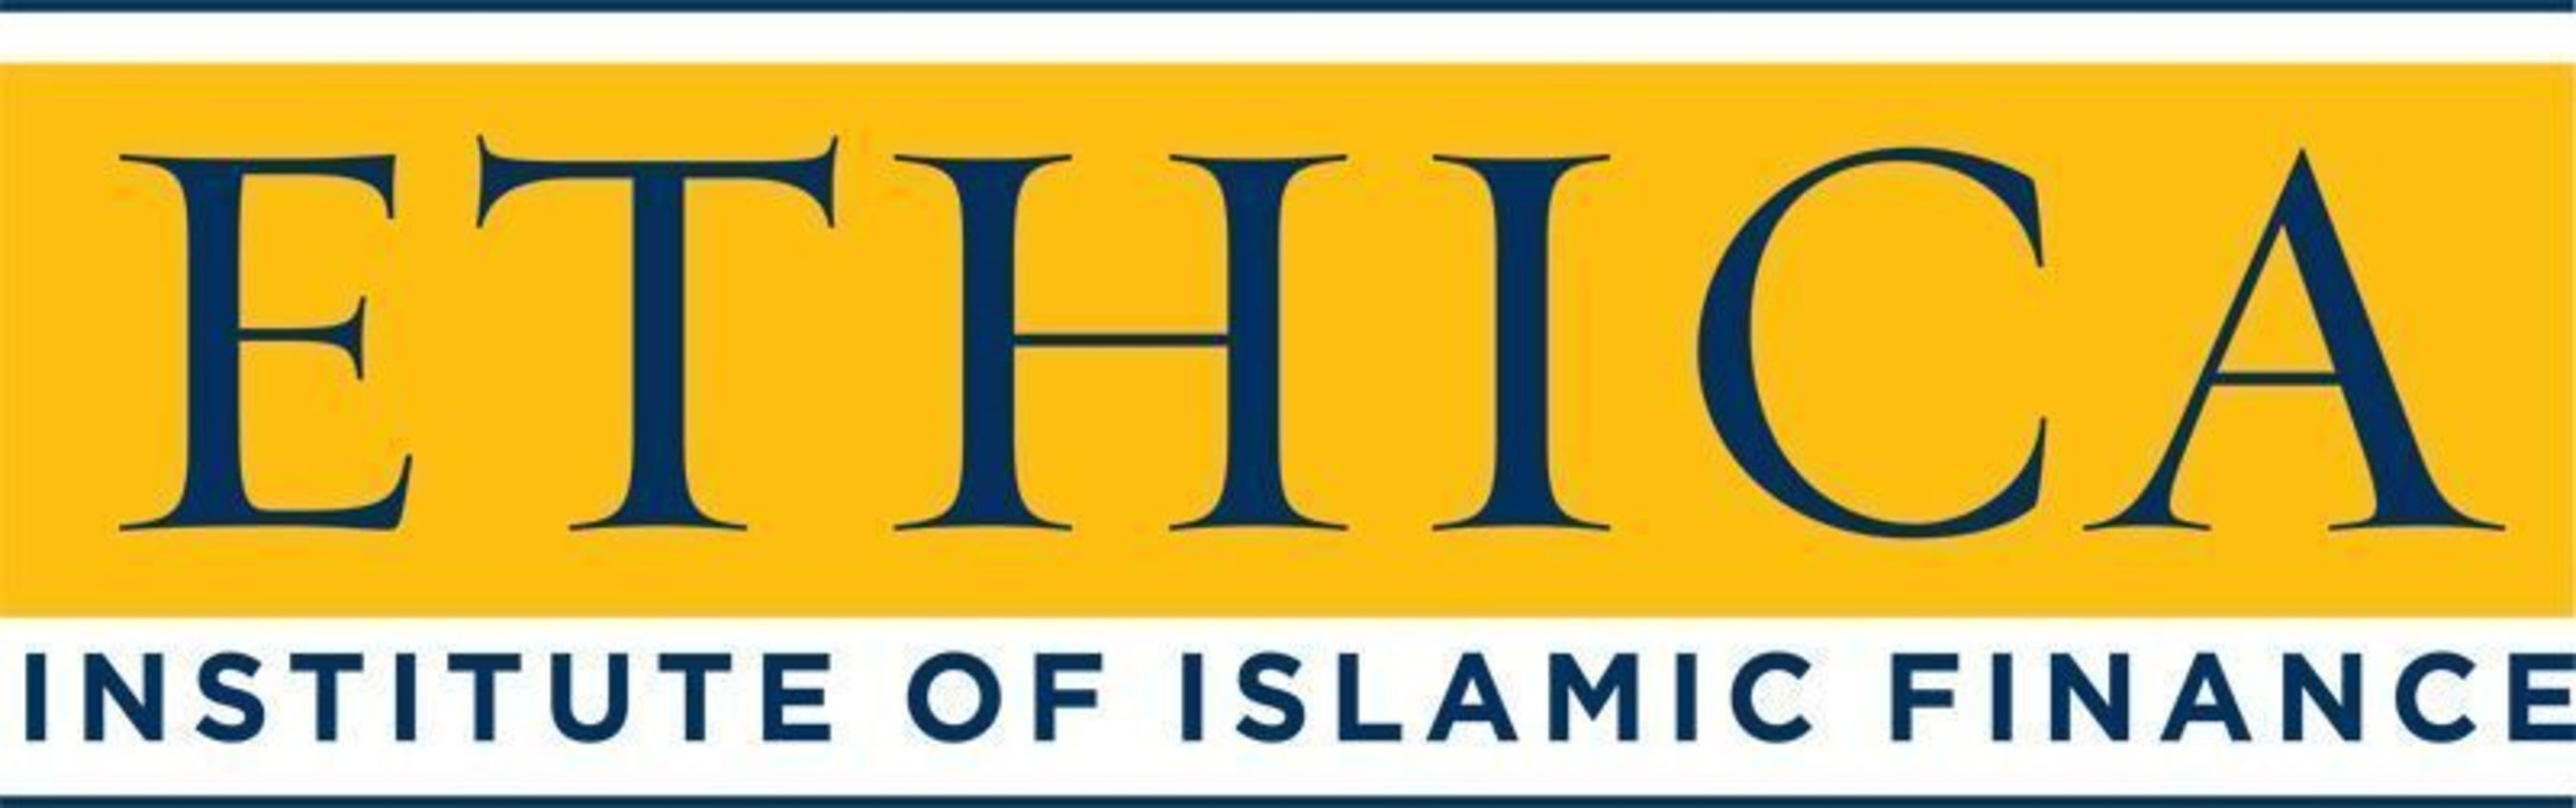 Ethica Institute of Islamic Finance logo (PRNewsFoto/Ethica Institute)